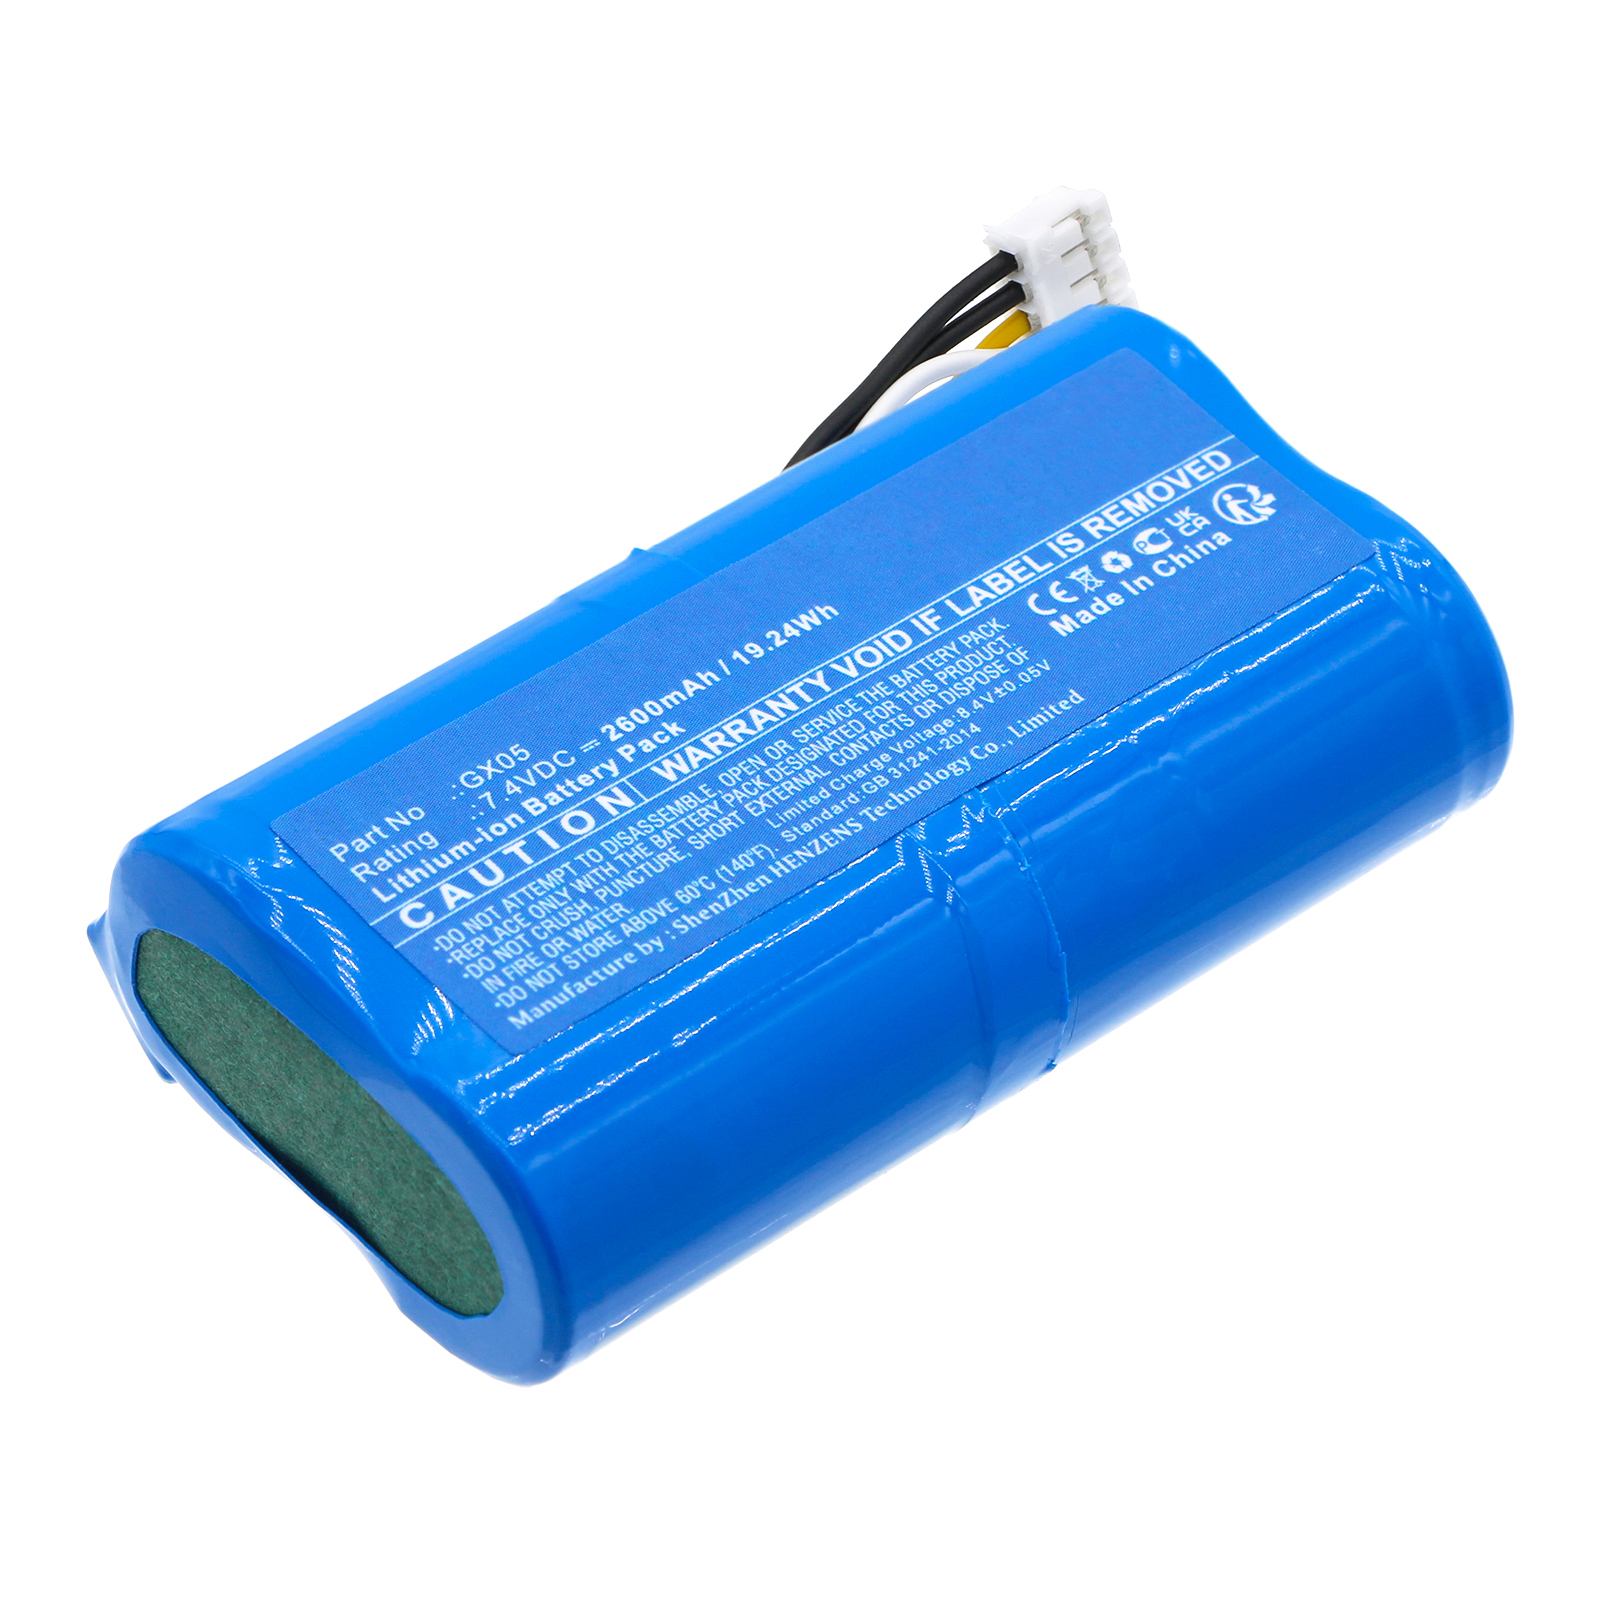 Batteries for NEXGOCredit Card Reader